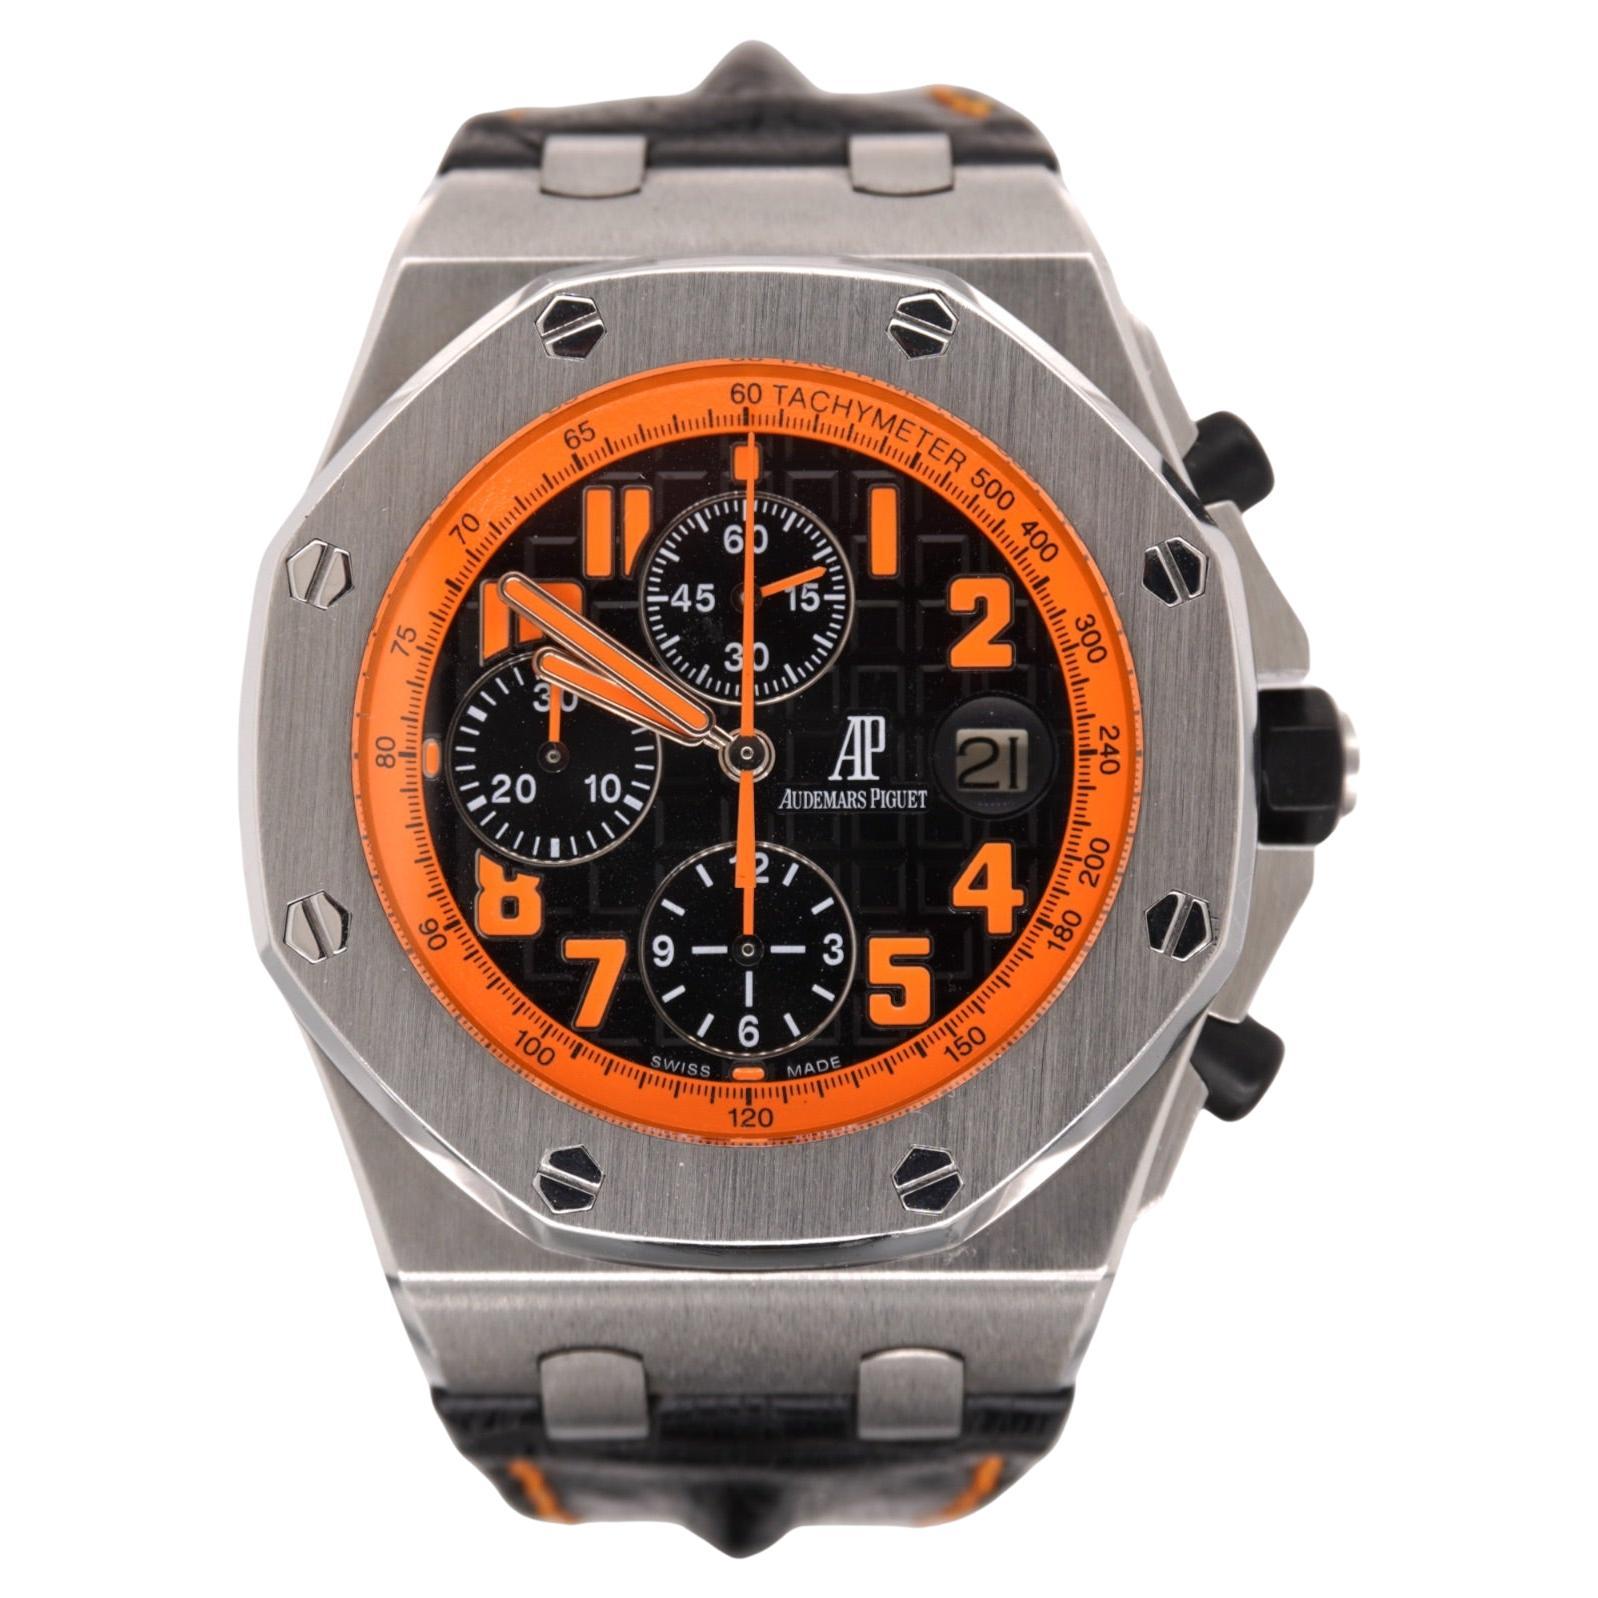 AUDEMARS PIGUET Royal Oak Offshore 42mm VOLCANO Orange Steel Watch Ref 26170ST